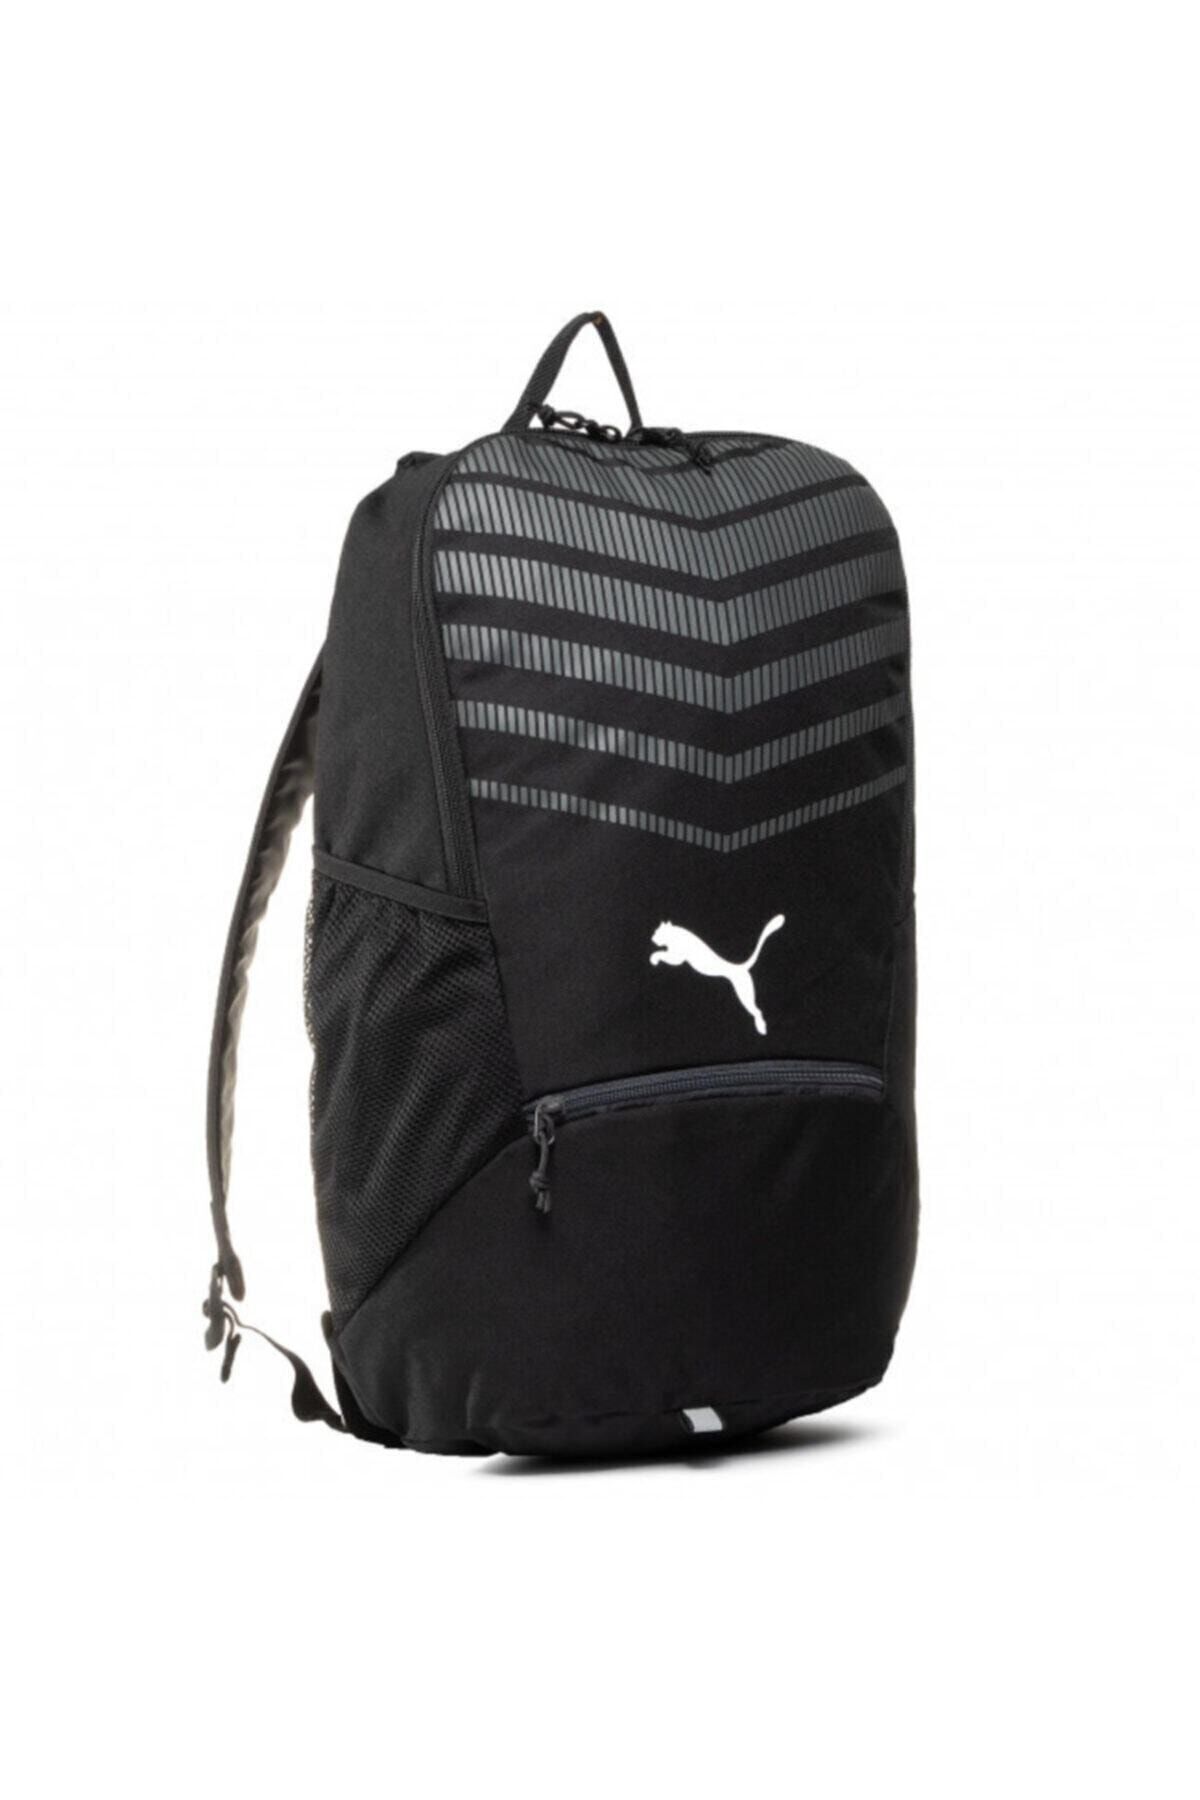 Puma Ftblplay Backpack